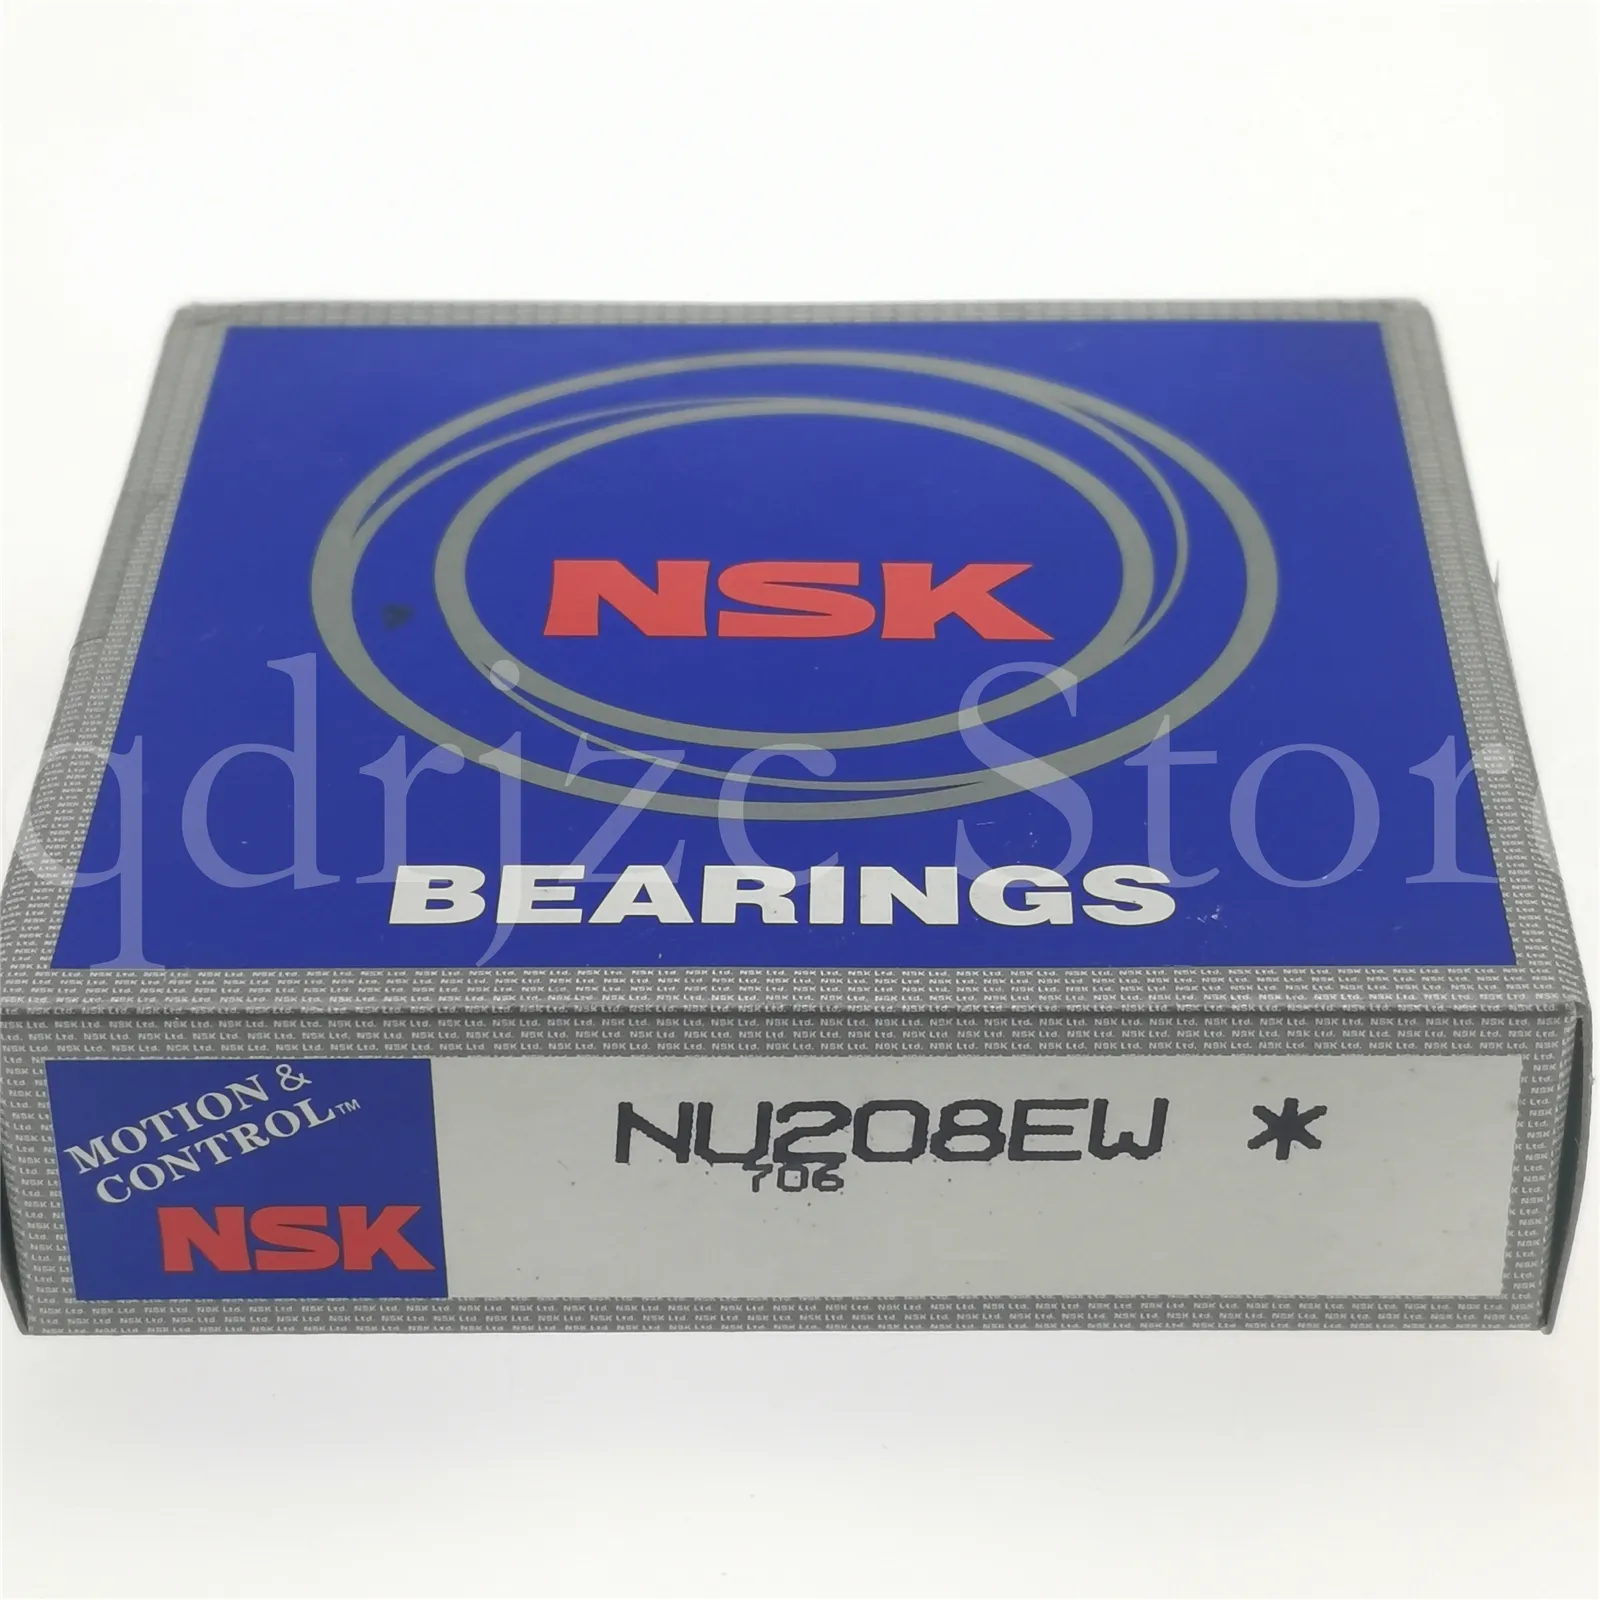 NSK short cylindrical roller bearing NU208EW = NU208ECJ NU208-E-XL-JP3 40mm 80mm 18mm